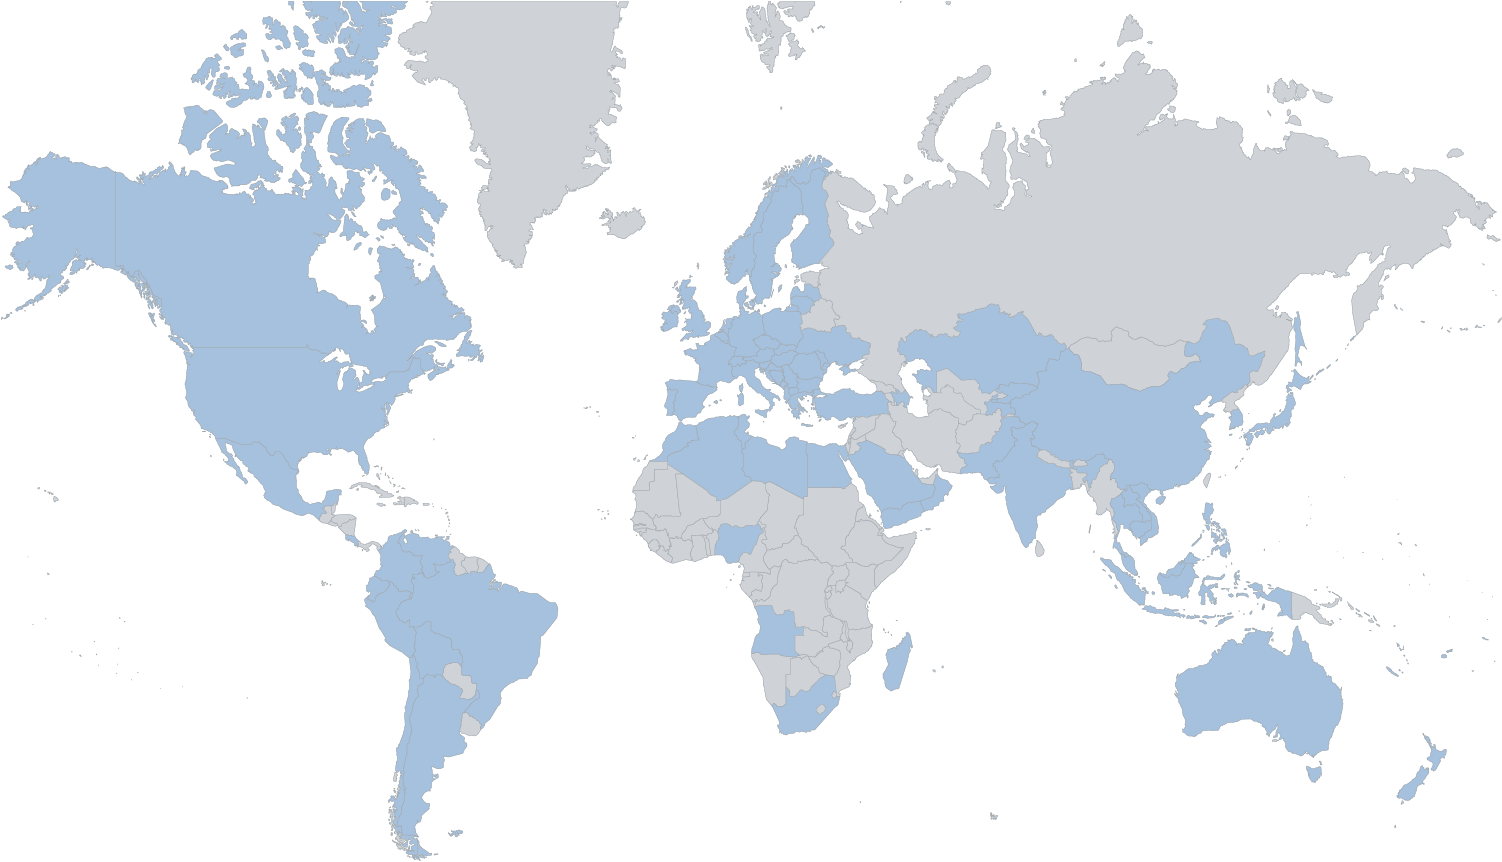 Swagelok global coverage map